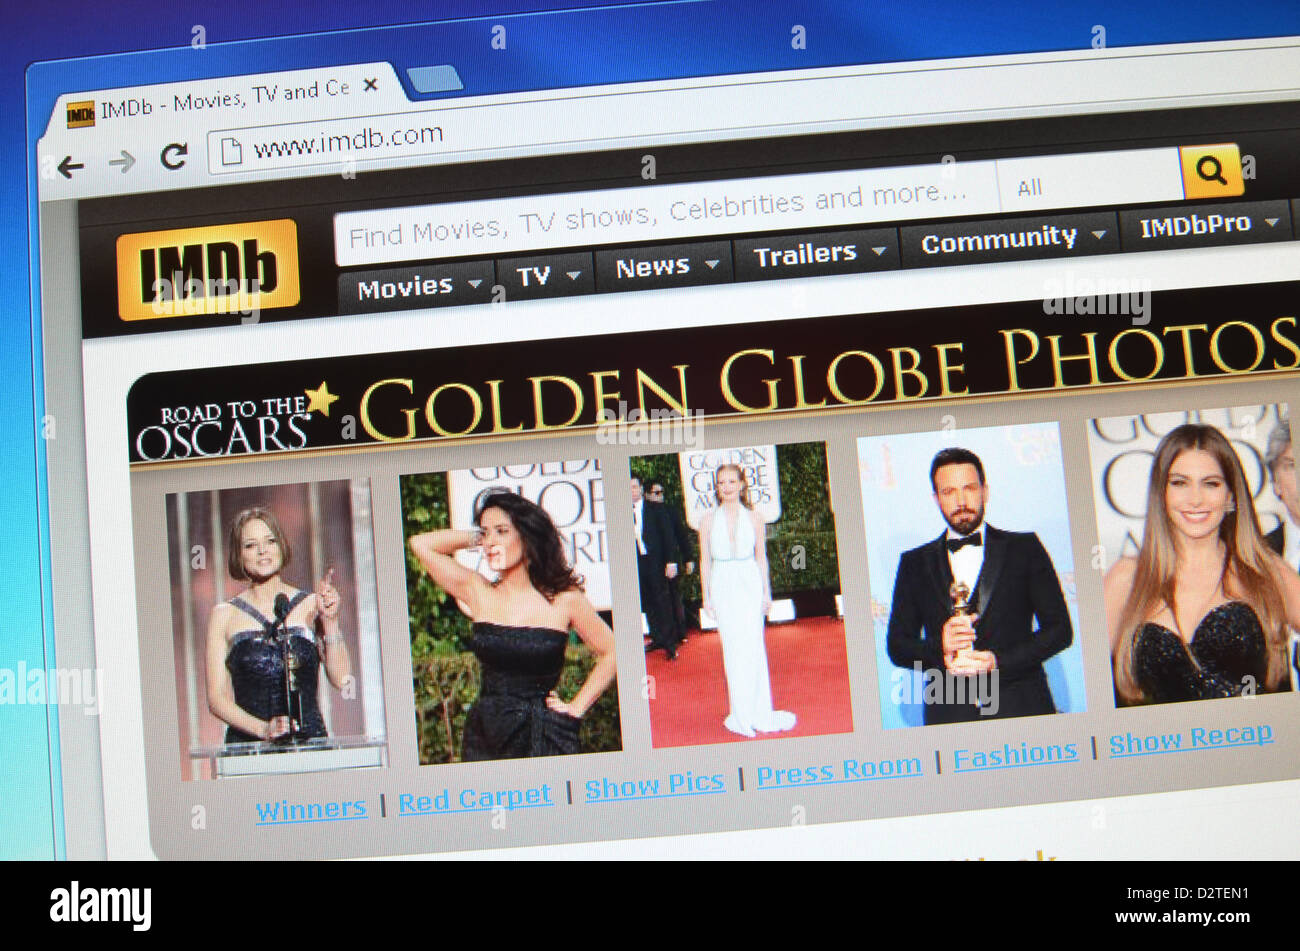 IMDB.com Website Screenshot - Golden Globe Stockfoto